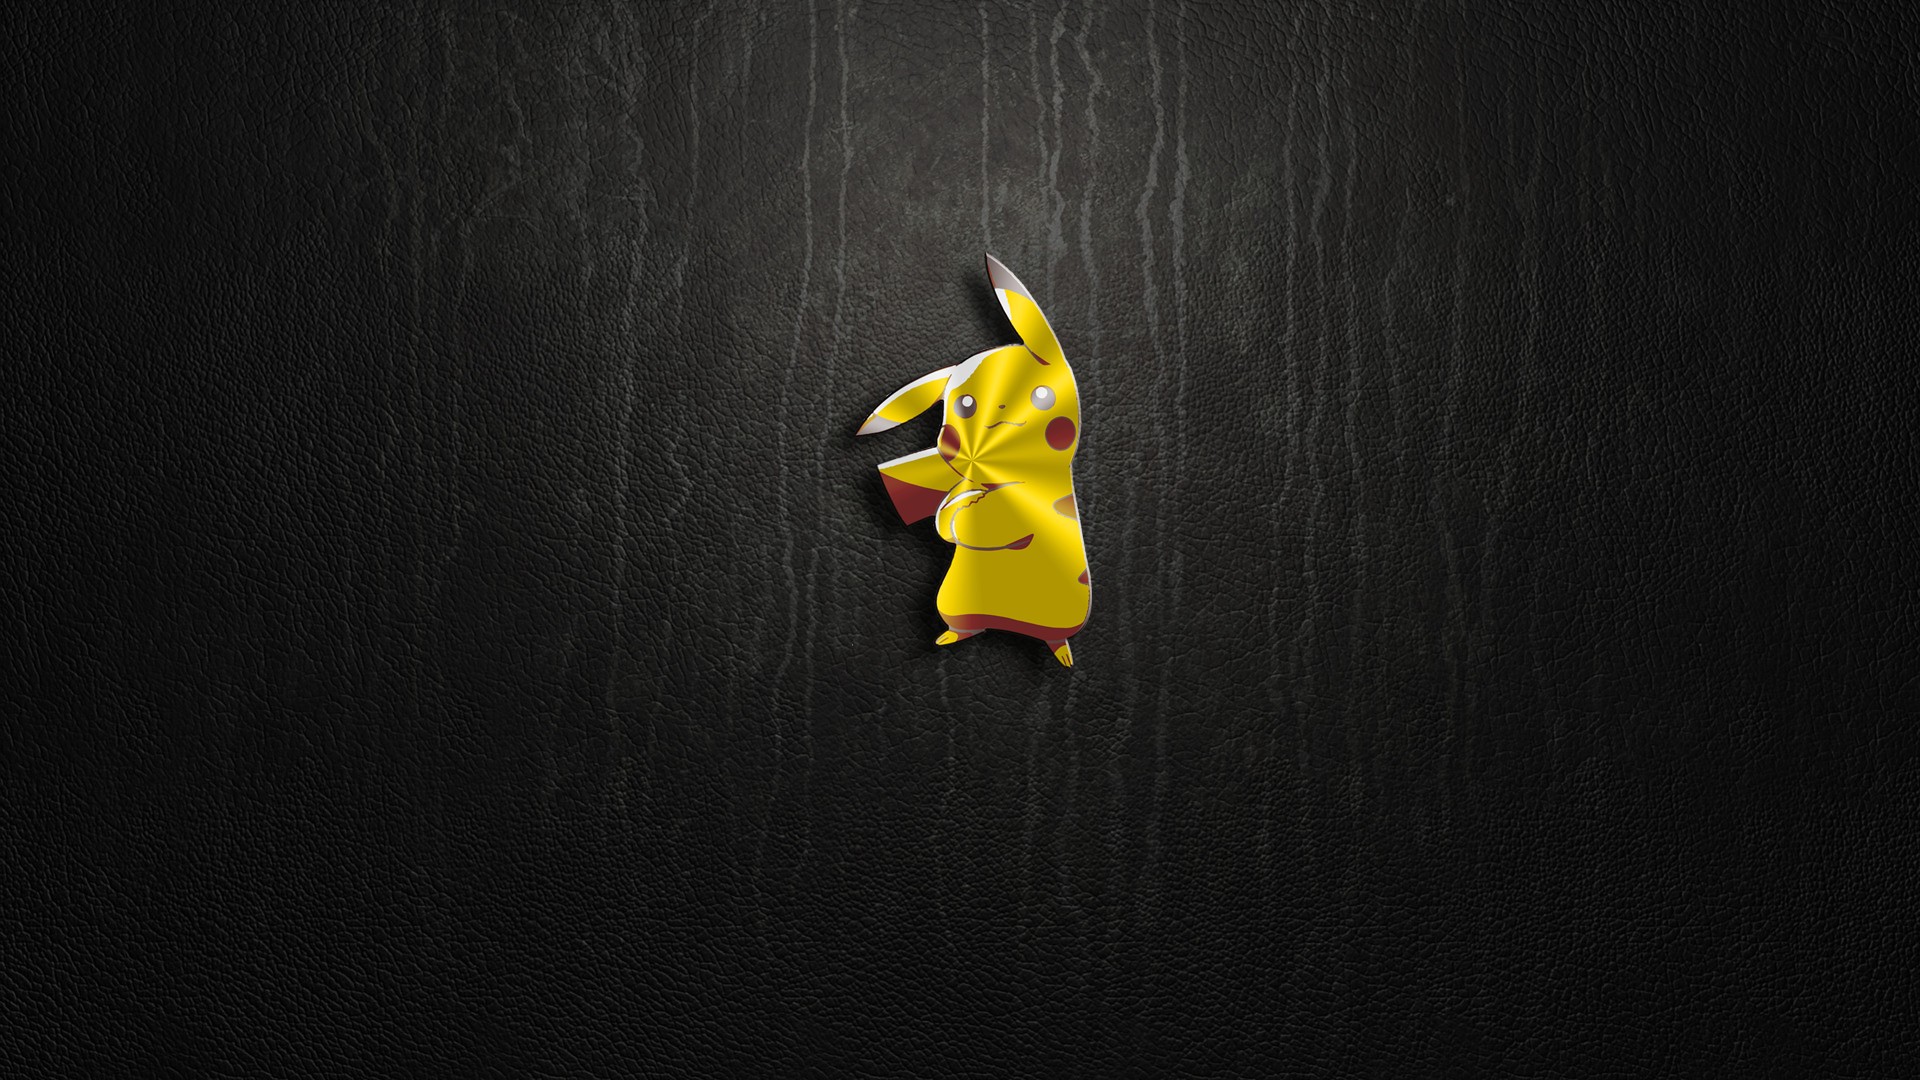 Pikachu keychain on a black background